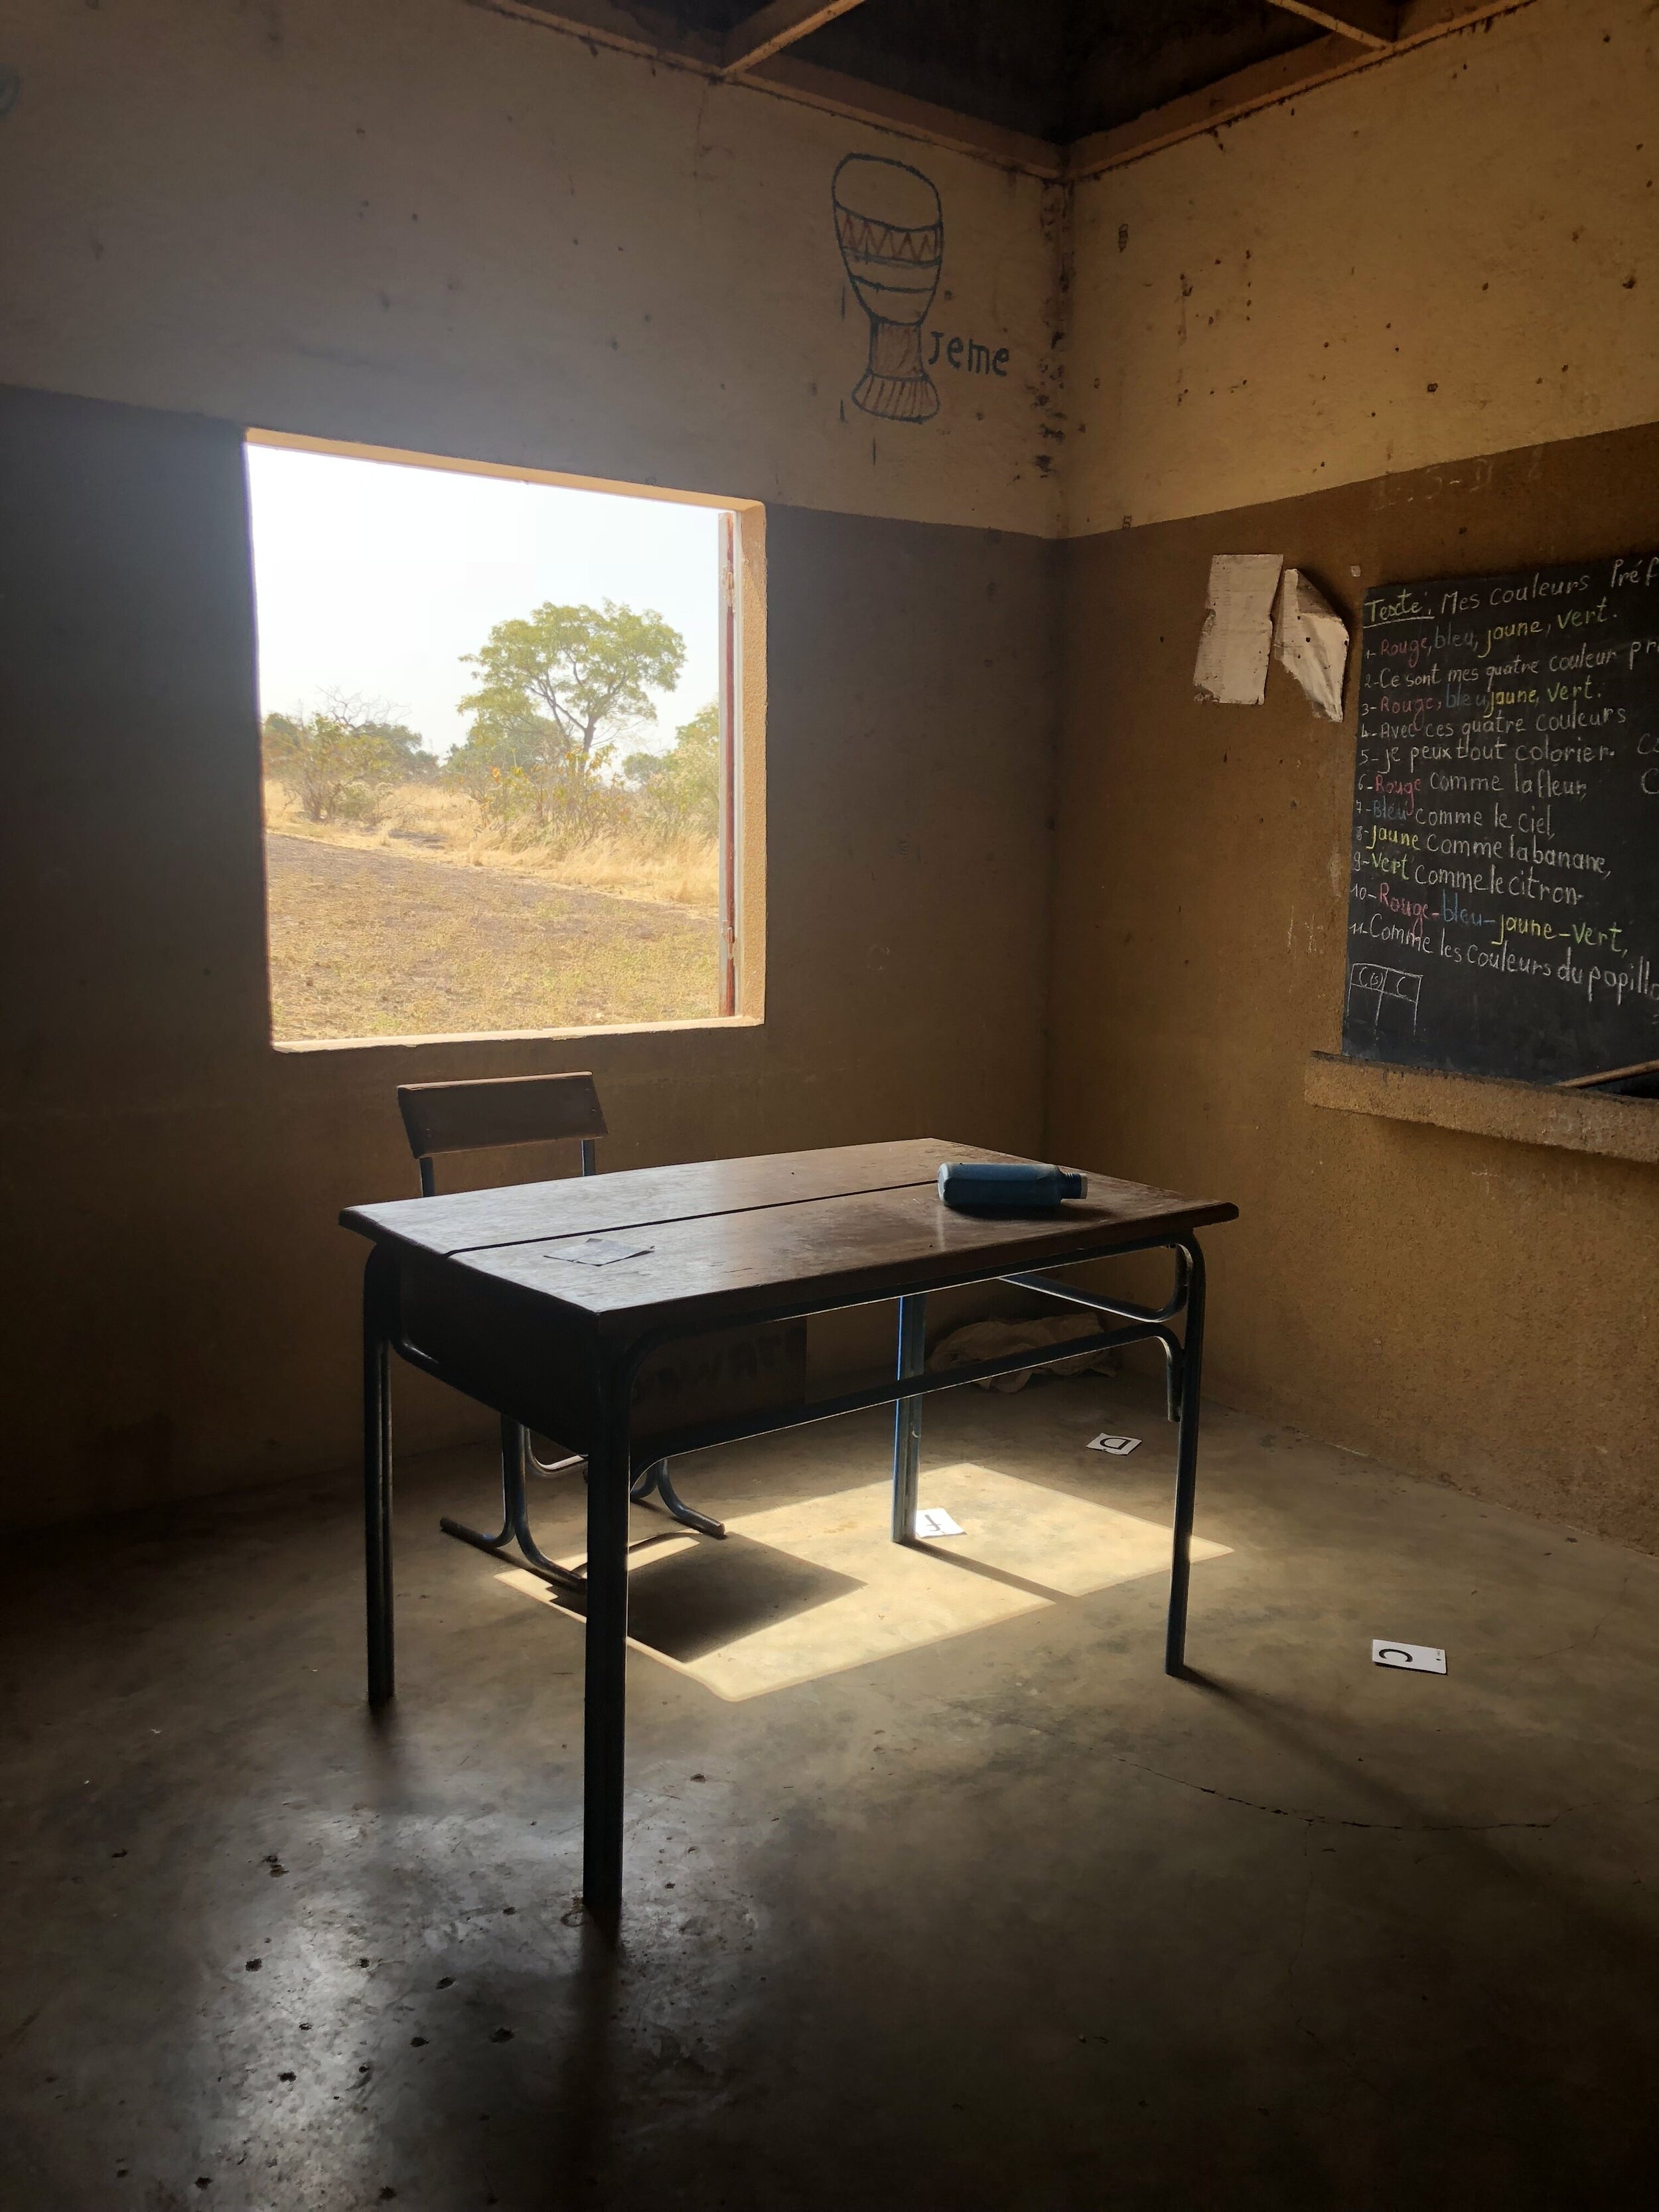 Inside Banko's primary school.